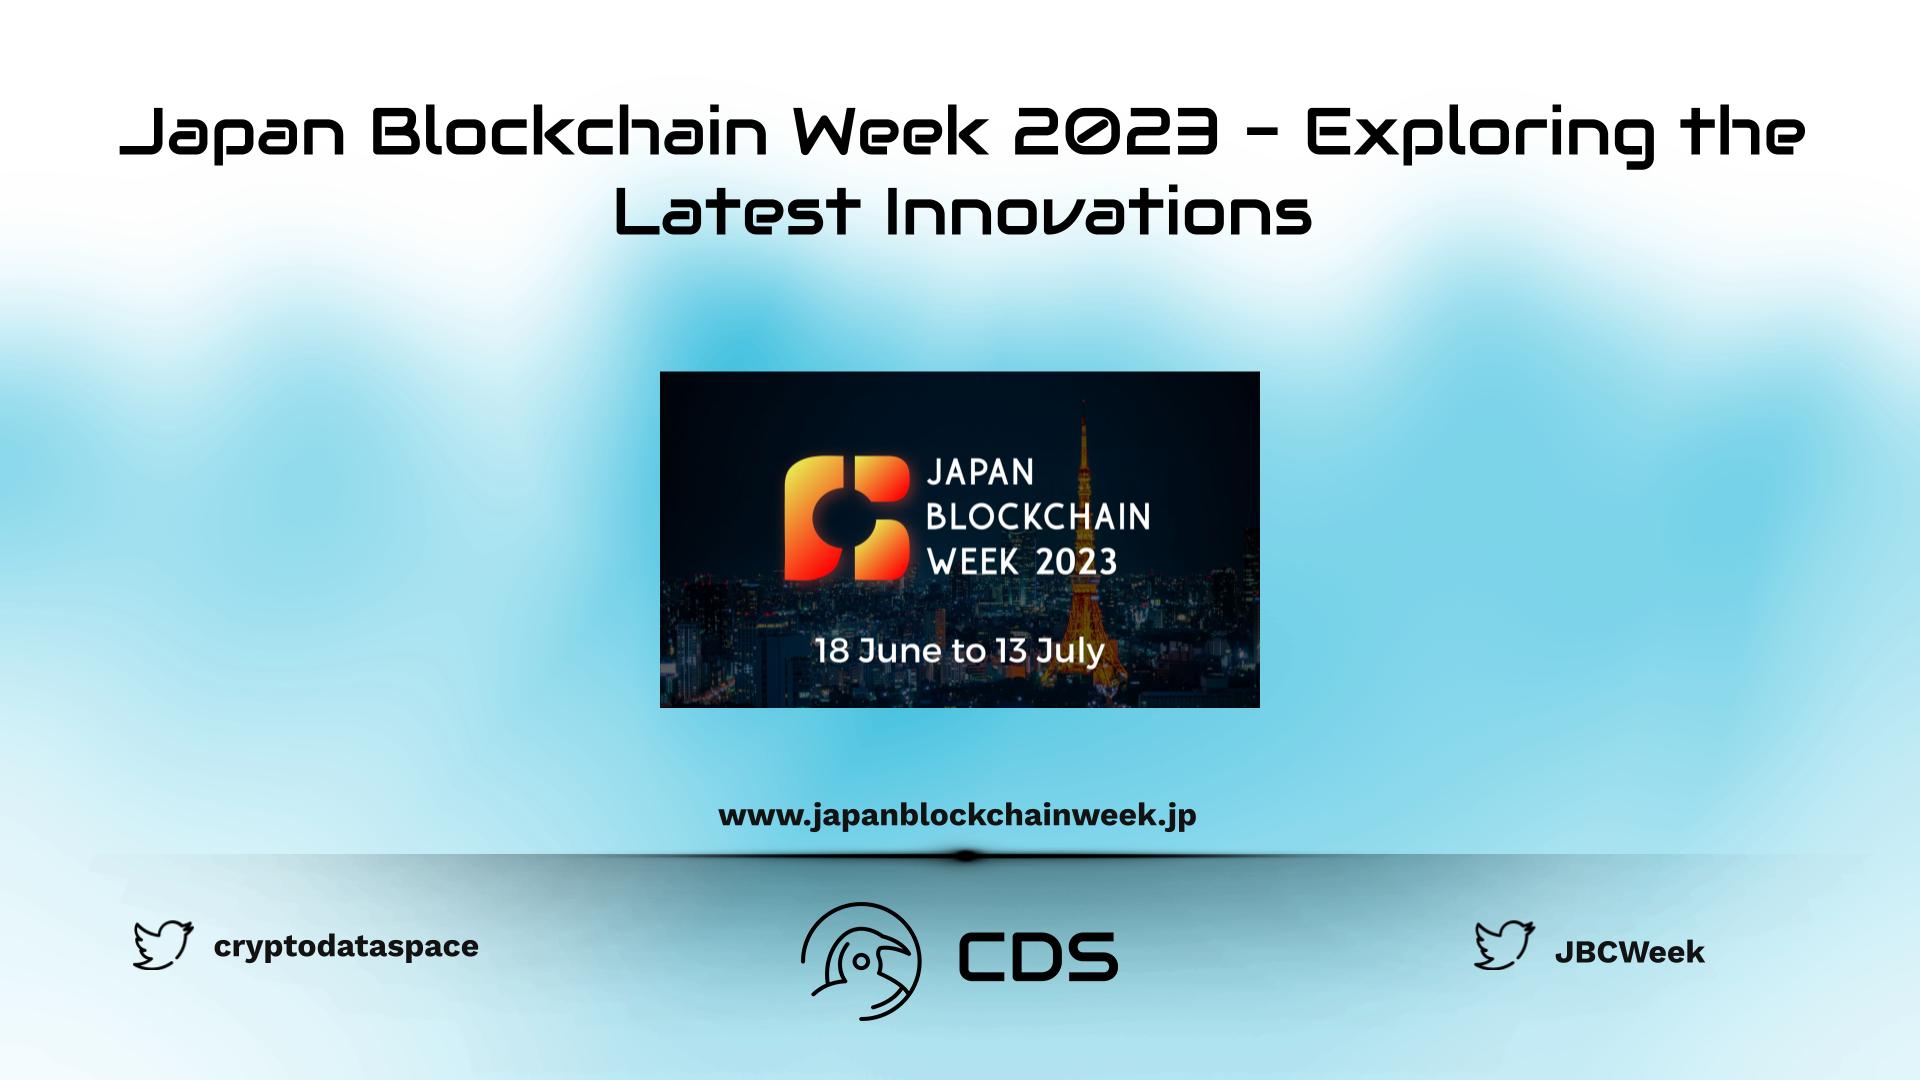 Japan Blockchain Week 2023 - Exploring the Latest Innovations